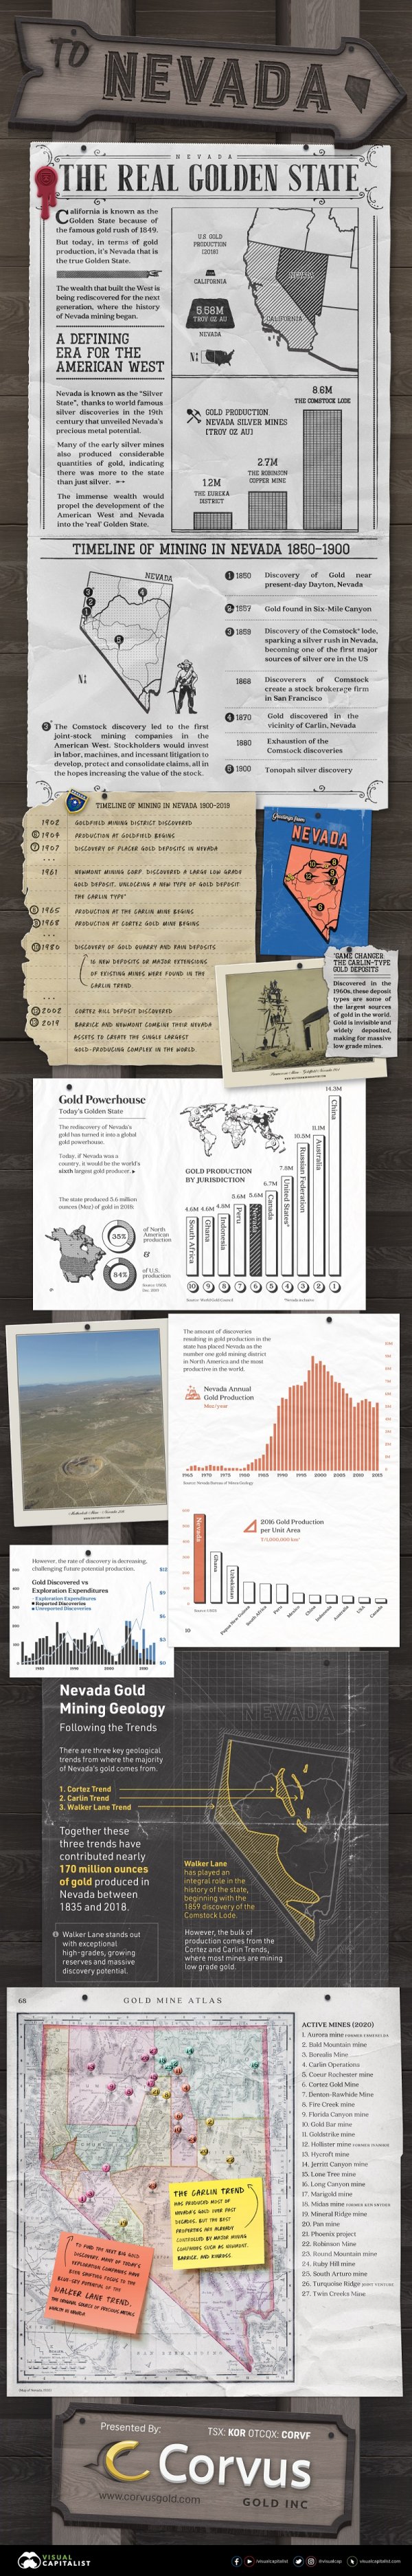 corvus nevadamininghistory infographic 14